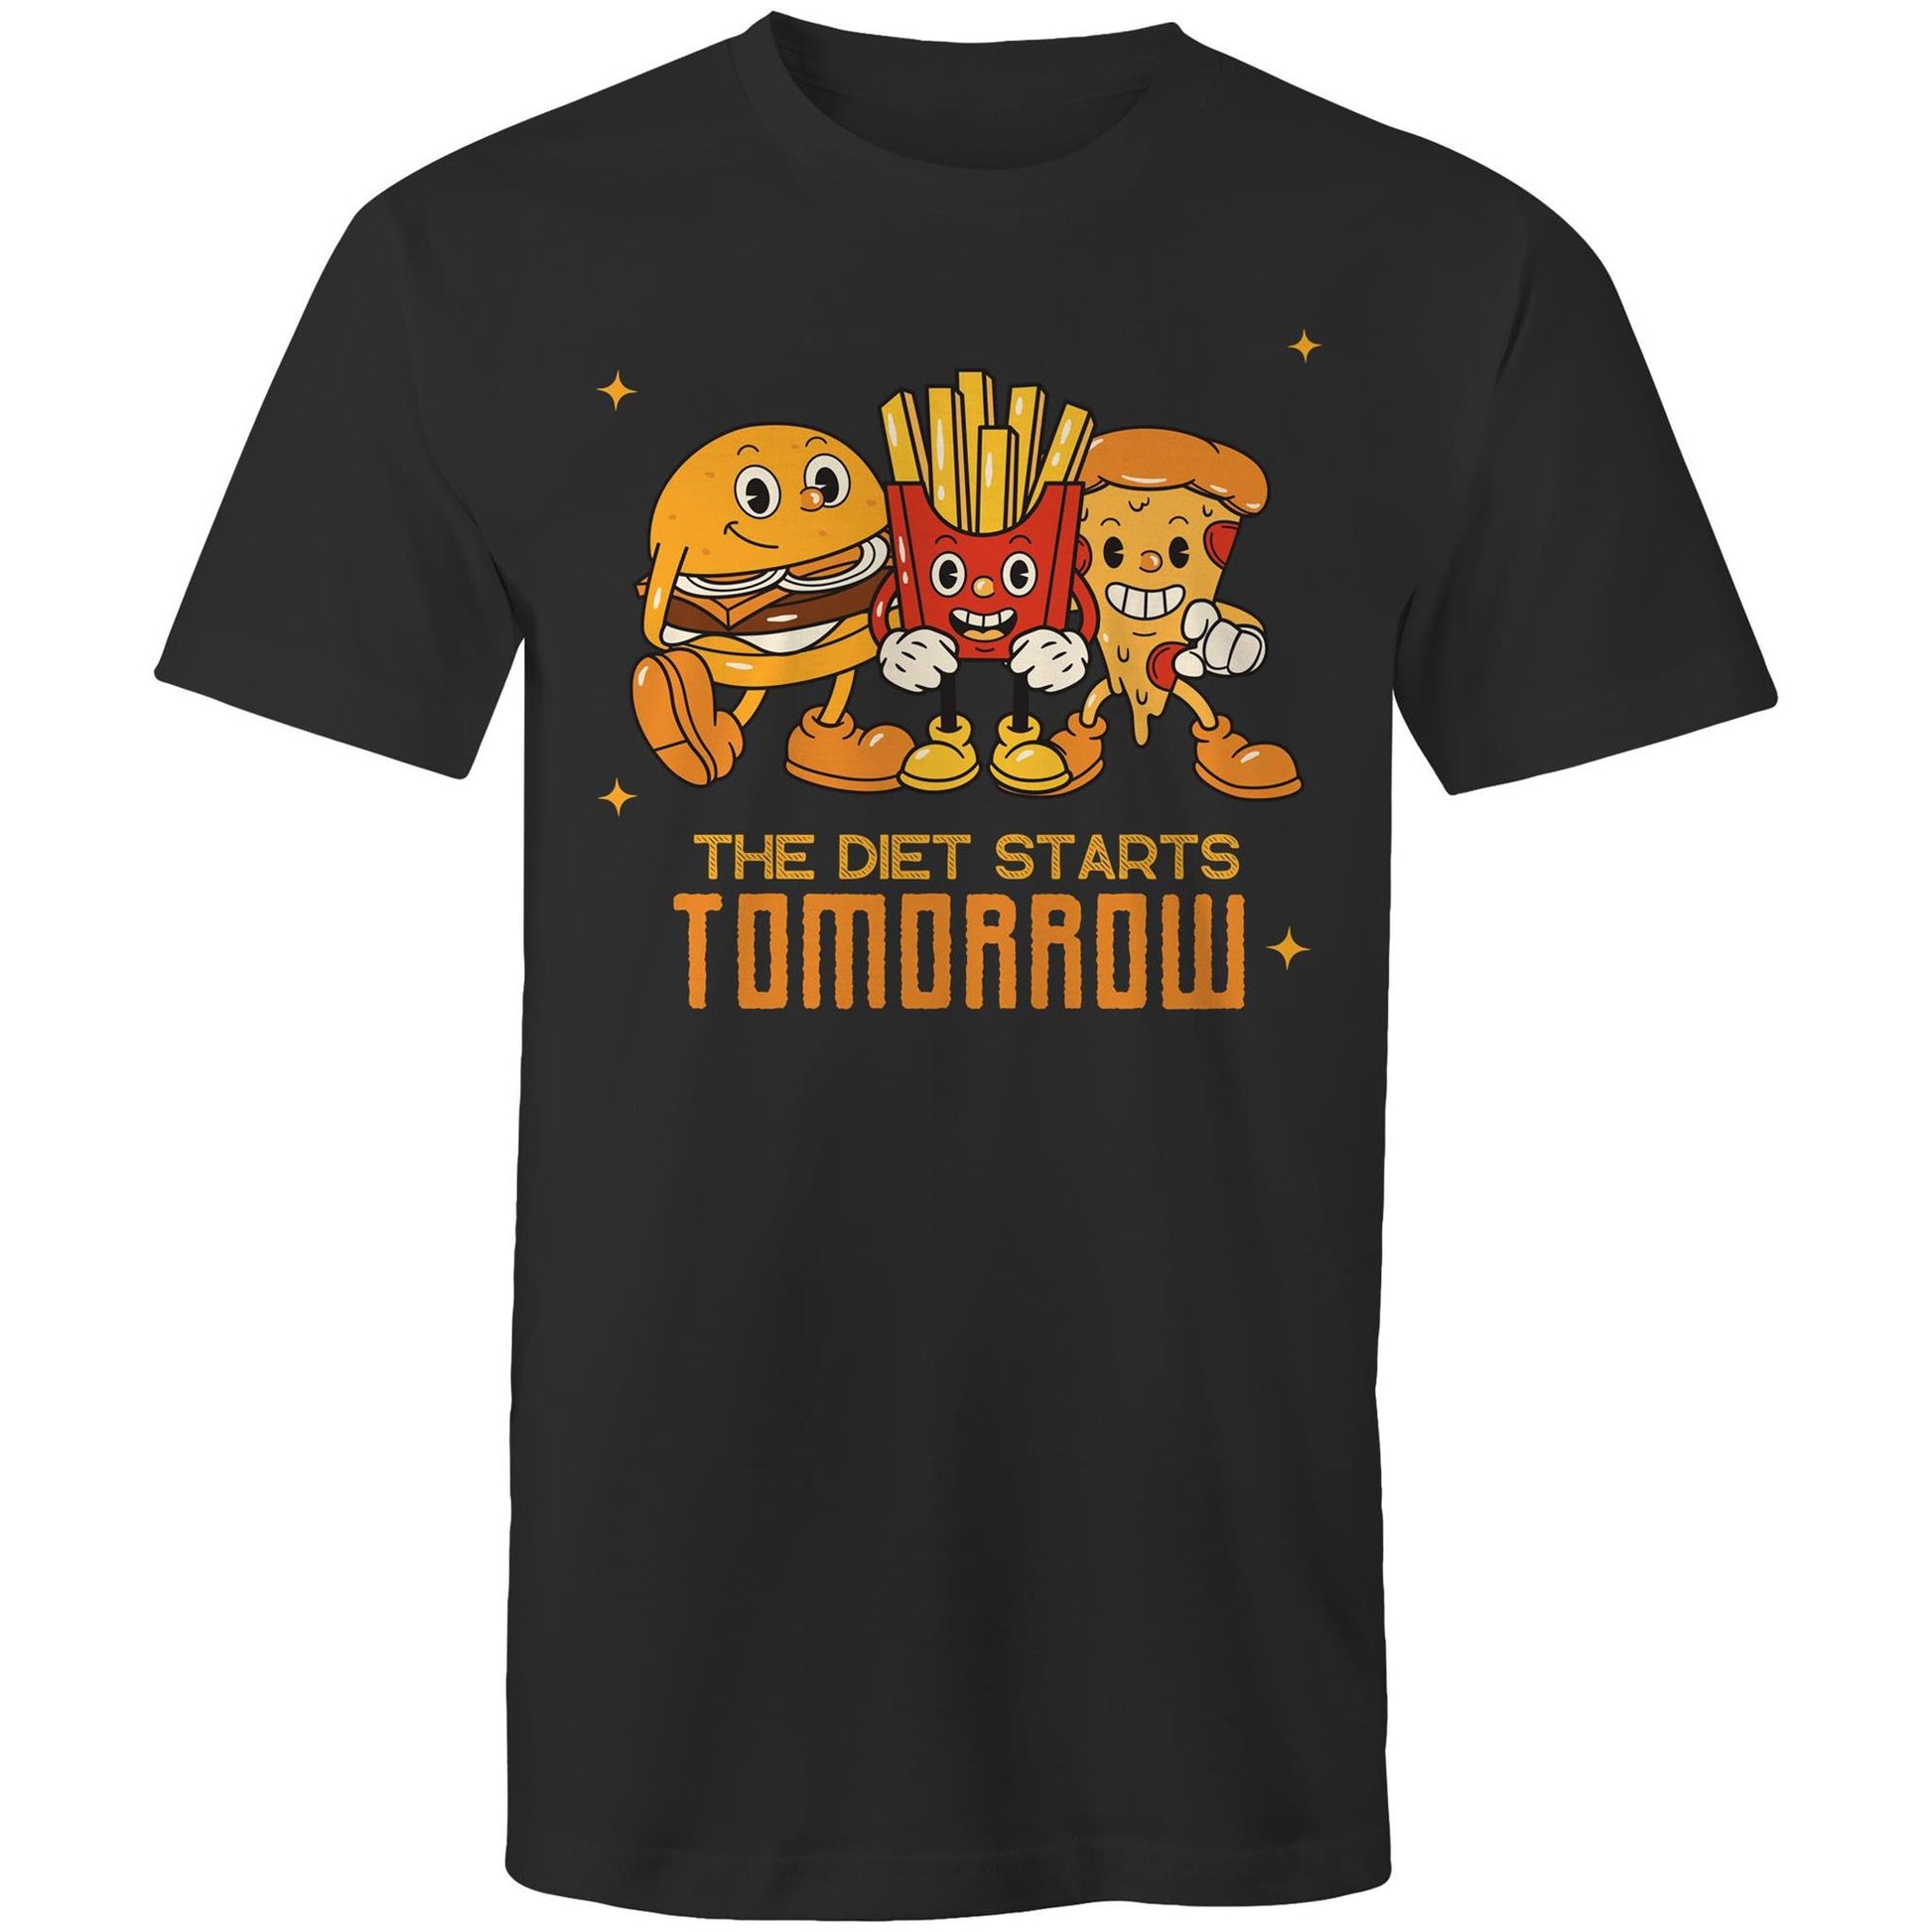 The Diet Starts Tomorrow, Hamburger, Pizza, Fries - Mens T-Shirt Black Mens T-shirt Food Funny Retro